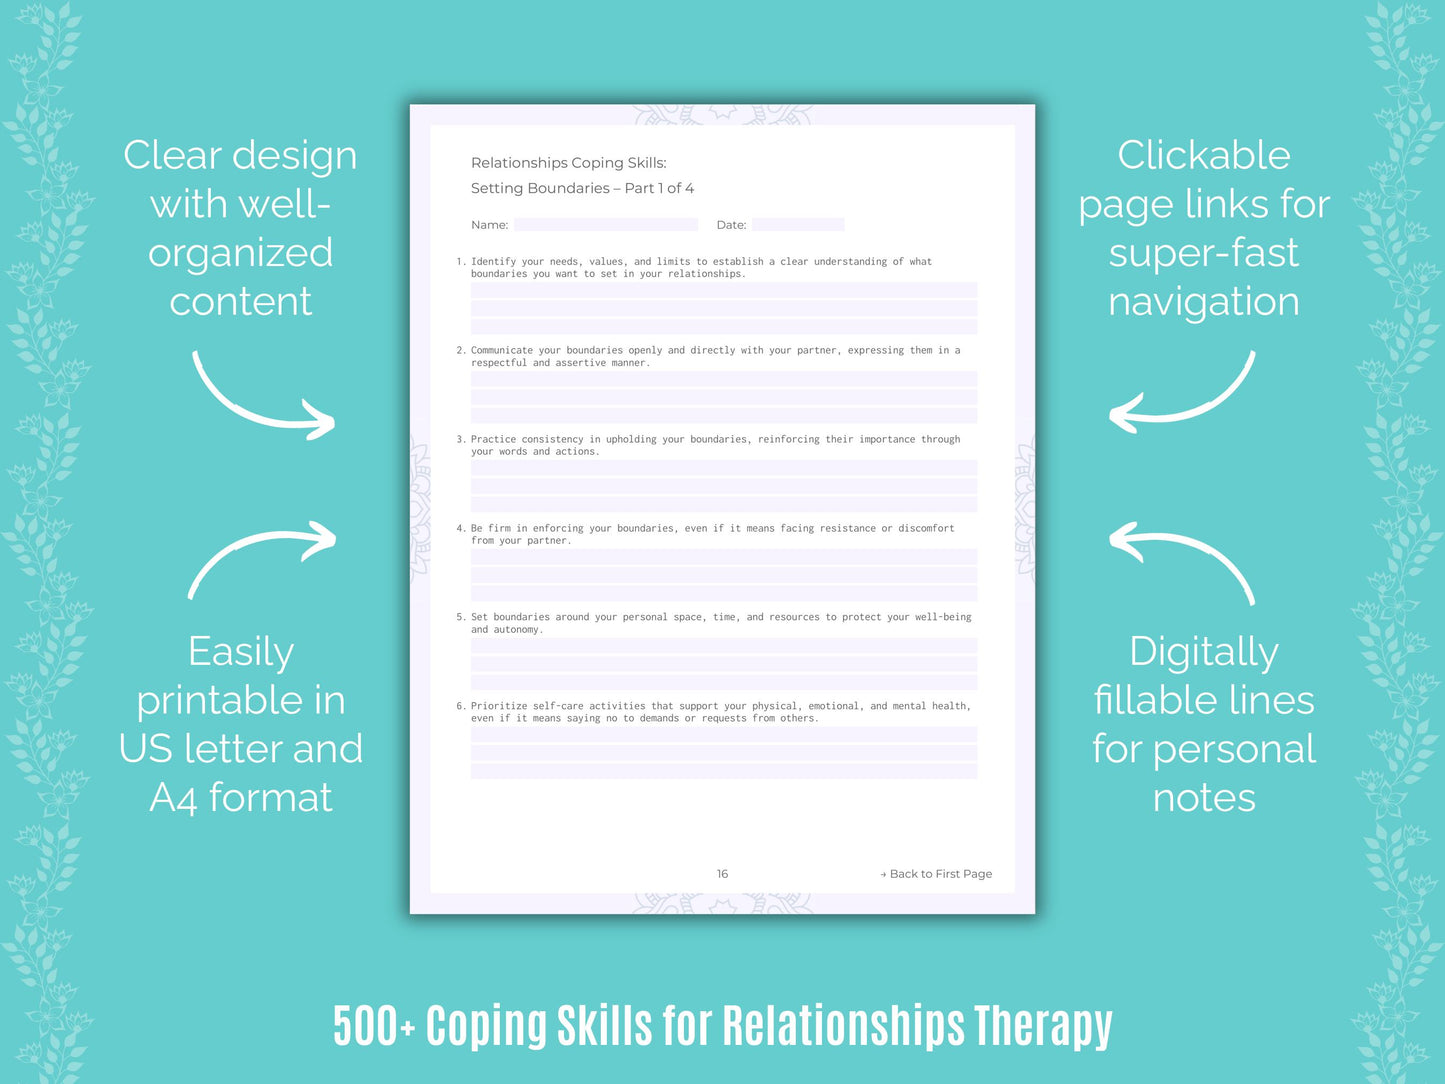 Relationships Coping Skills Resource